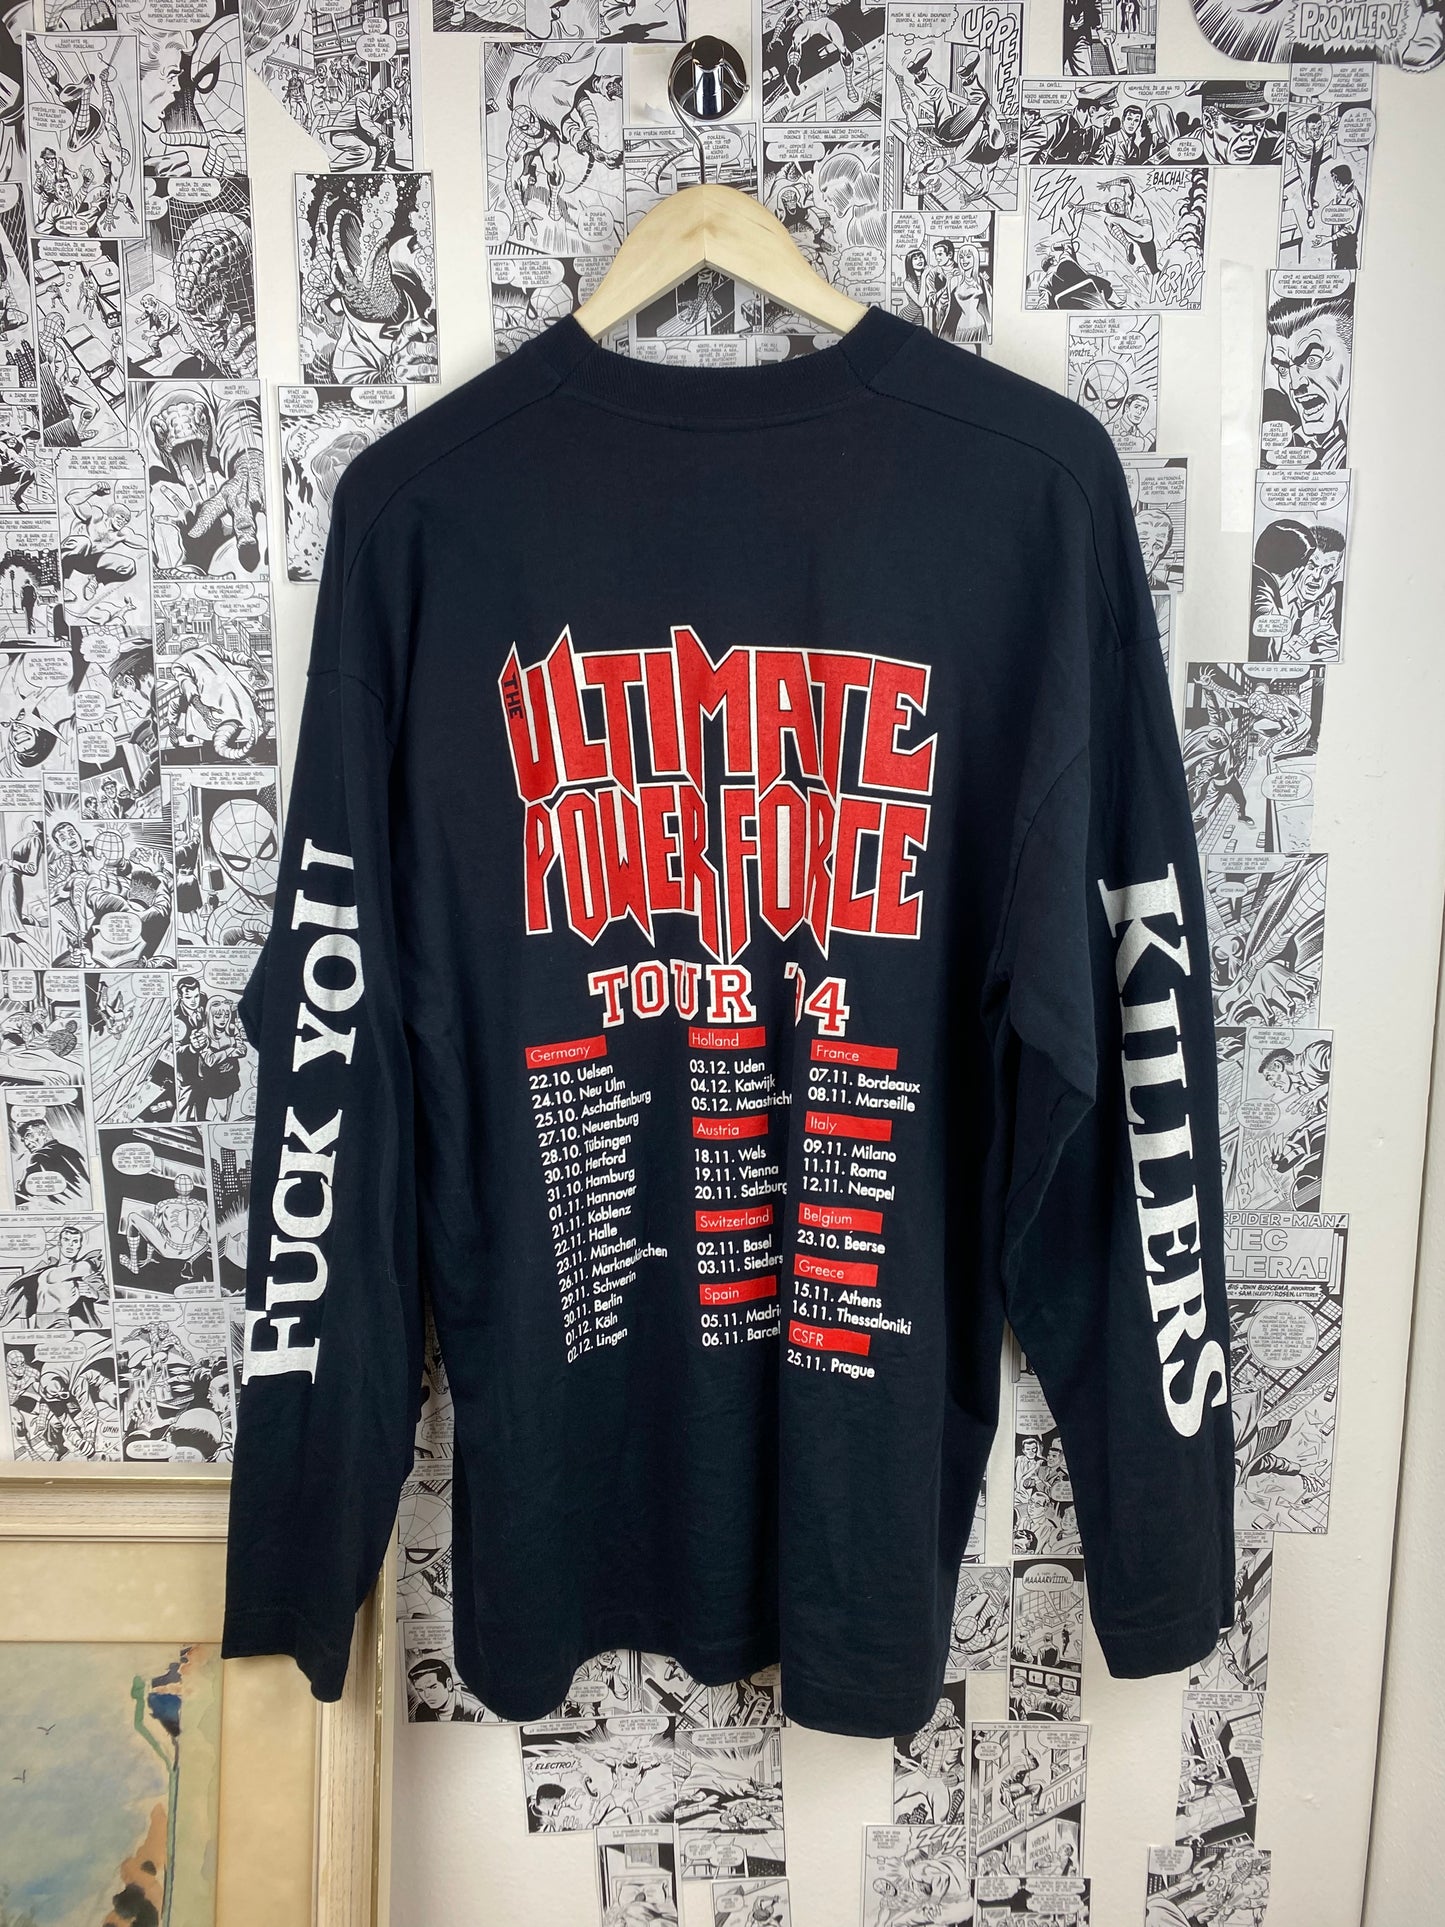 Vintage Killers “Menace to Society” 1994 tour t-shirt - size XL